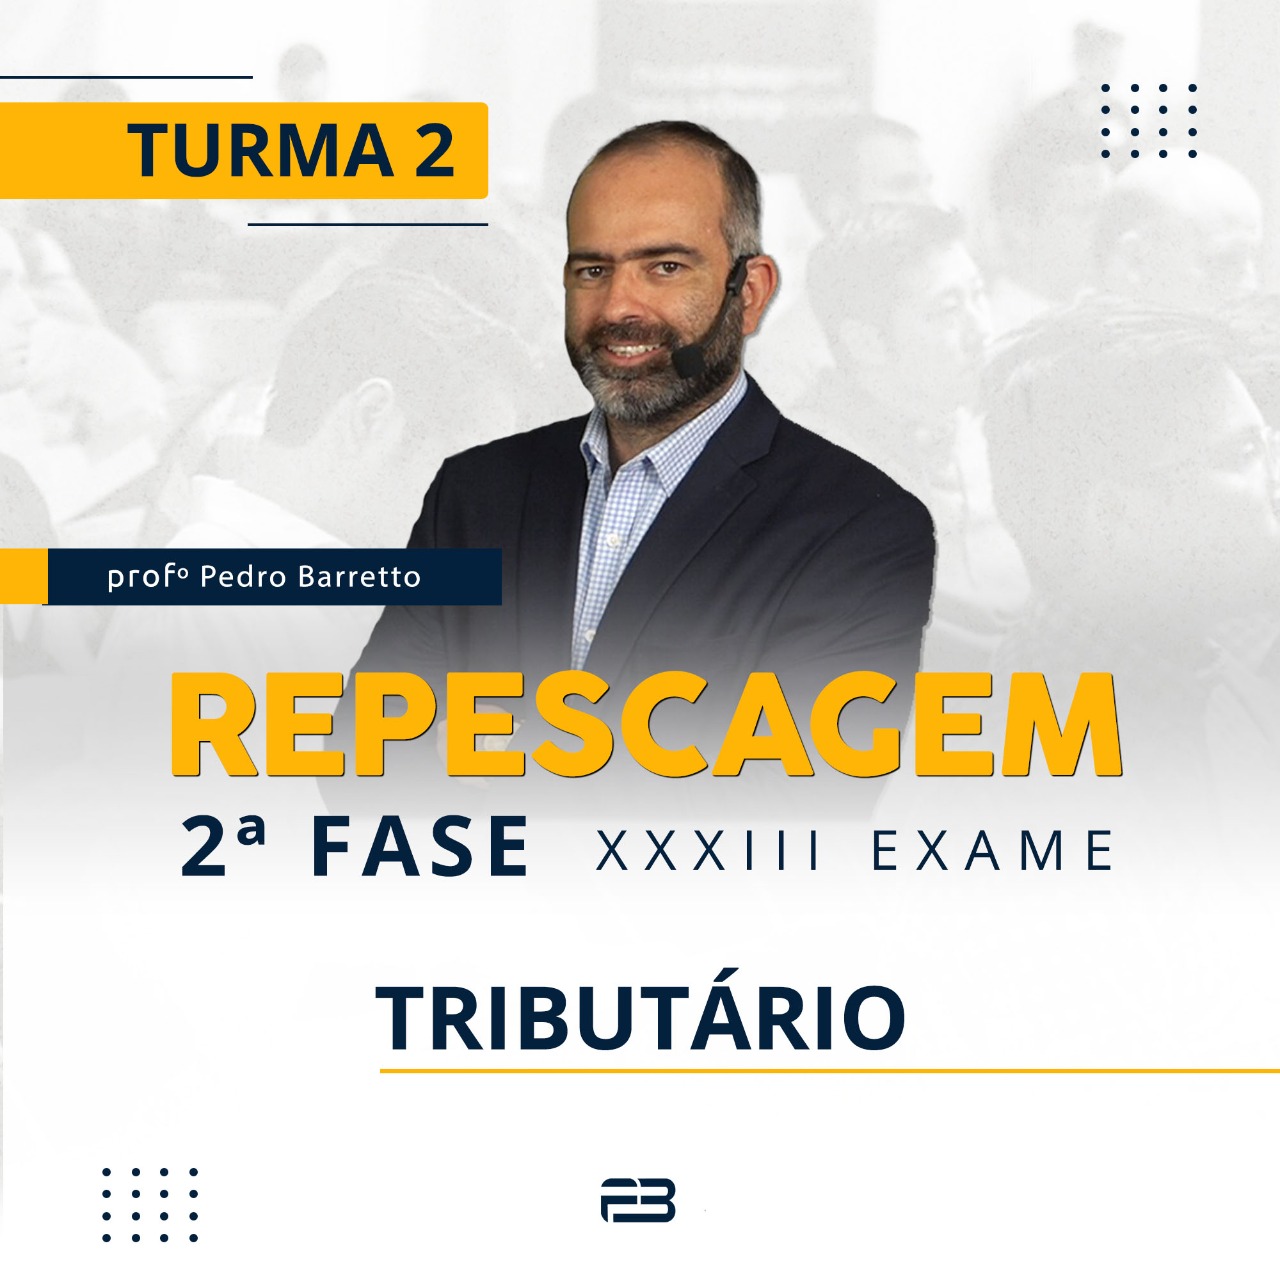 2ª FASE REPESCAGEM TRIBUTÁRIO TURMA 2 - XXXIII EXAME ONLINE